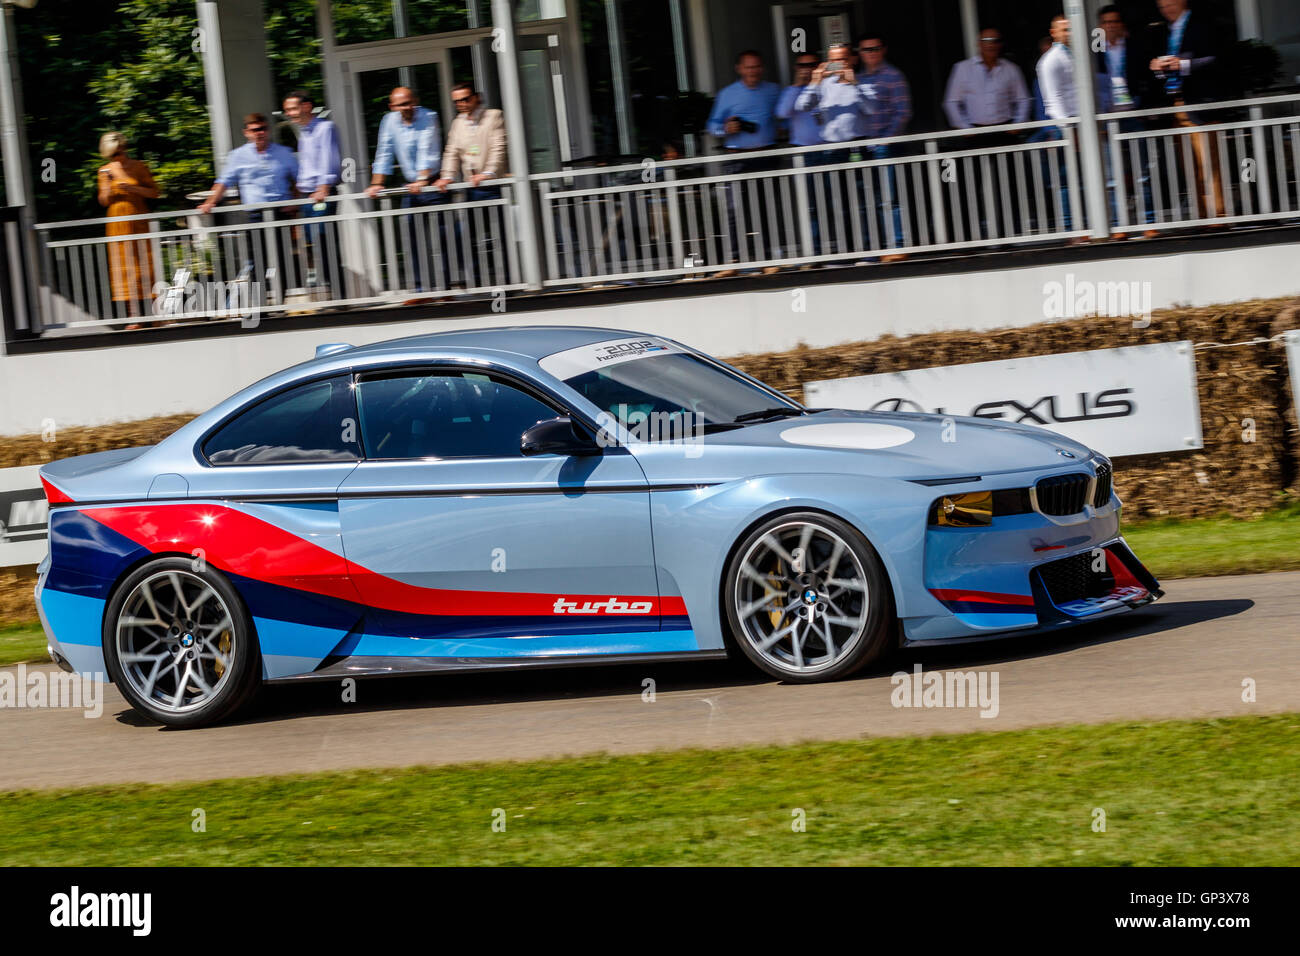 2016 BMW 2002 Hommage Concept Car 2016 Goodwood Festival of Speed, Sussex,  UK Stockfotografie - Alamy